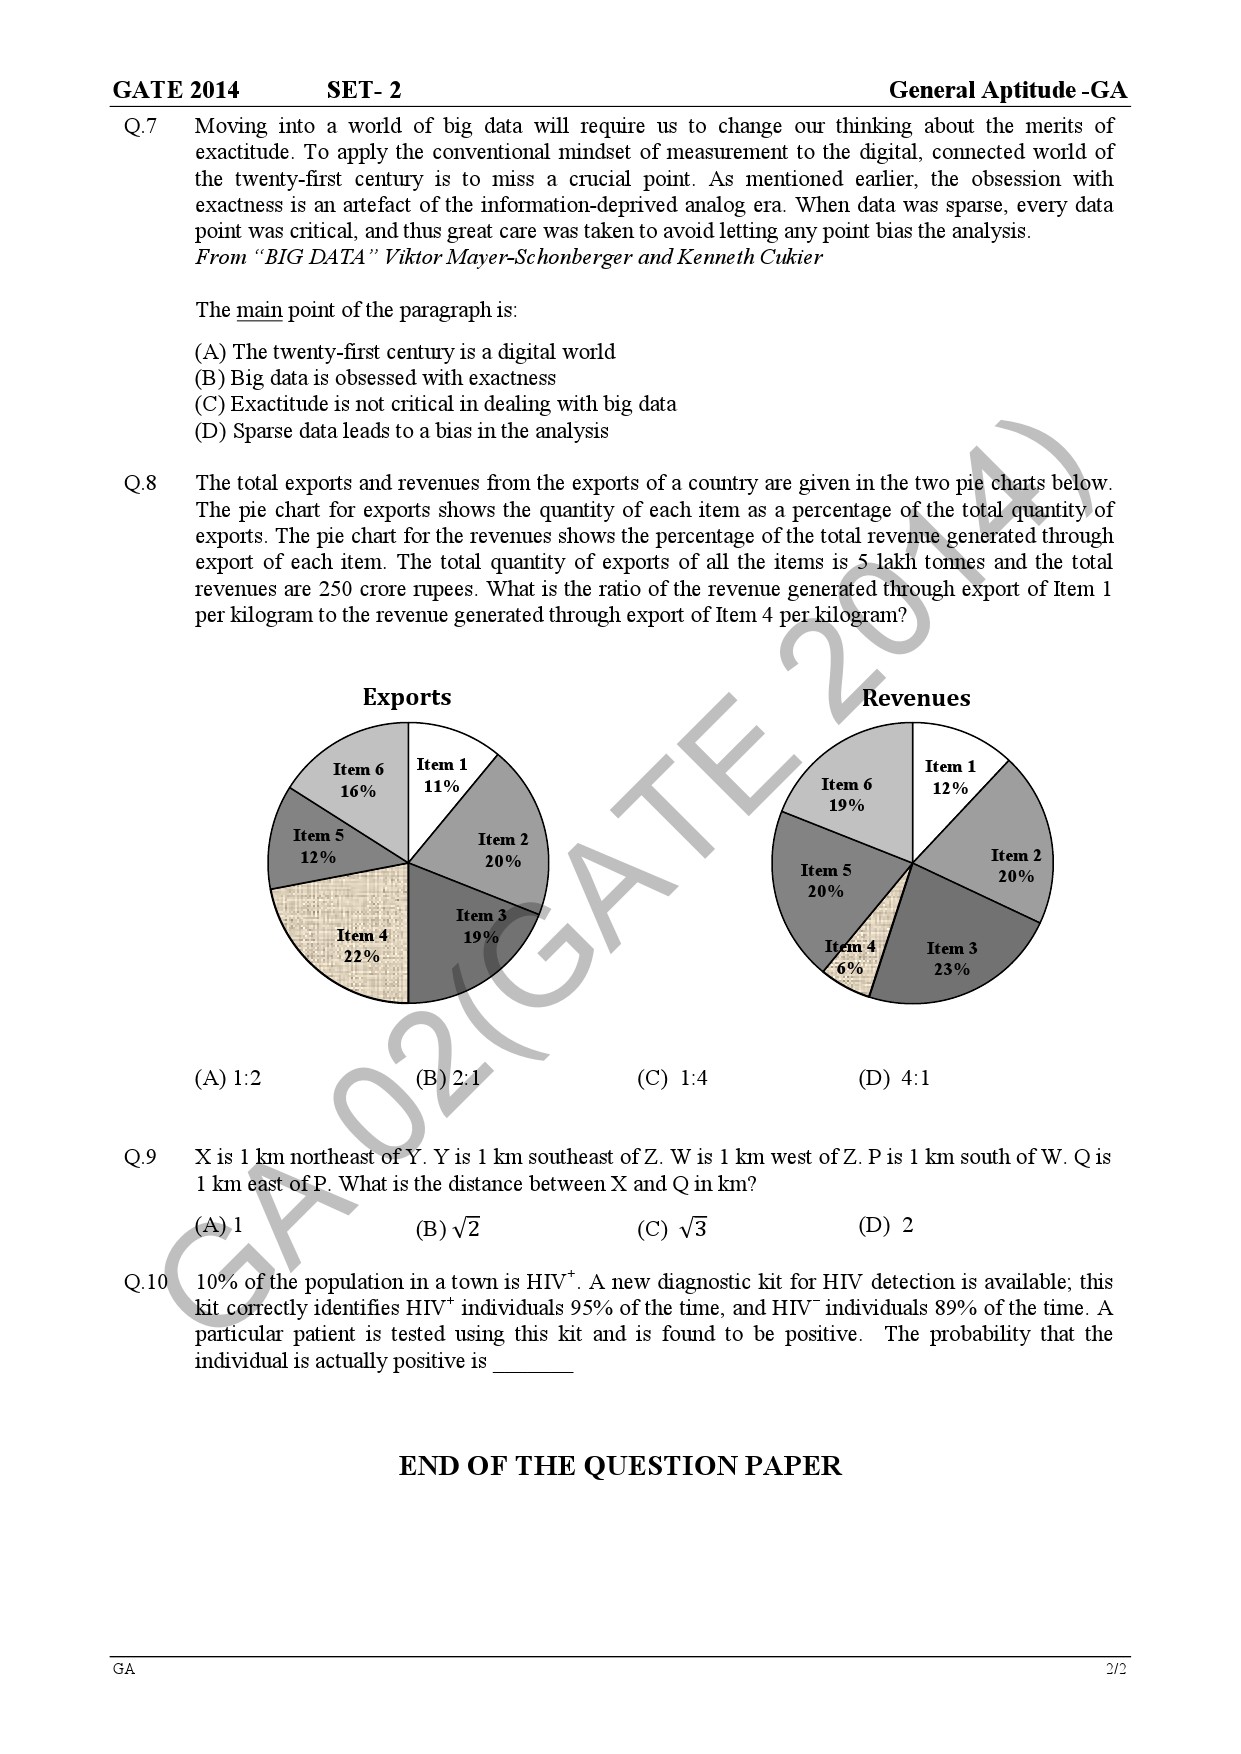 GATE Exam Question Paper 2014 Life Sciences 6